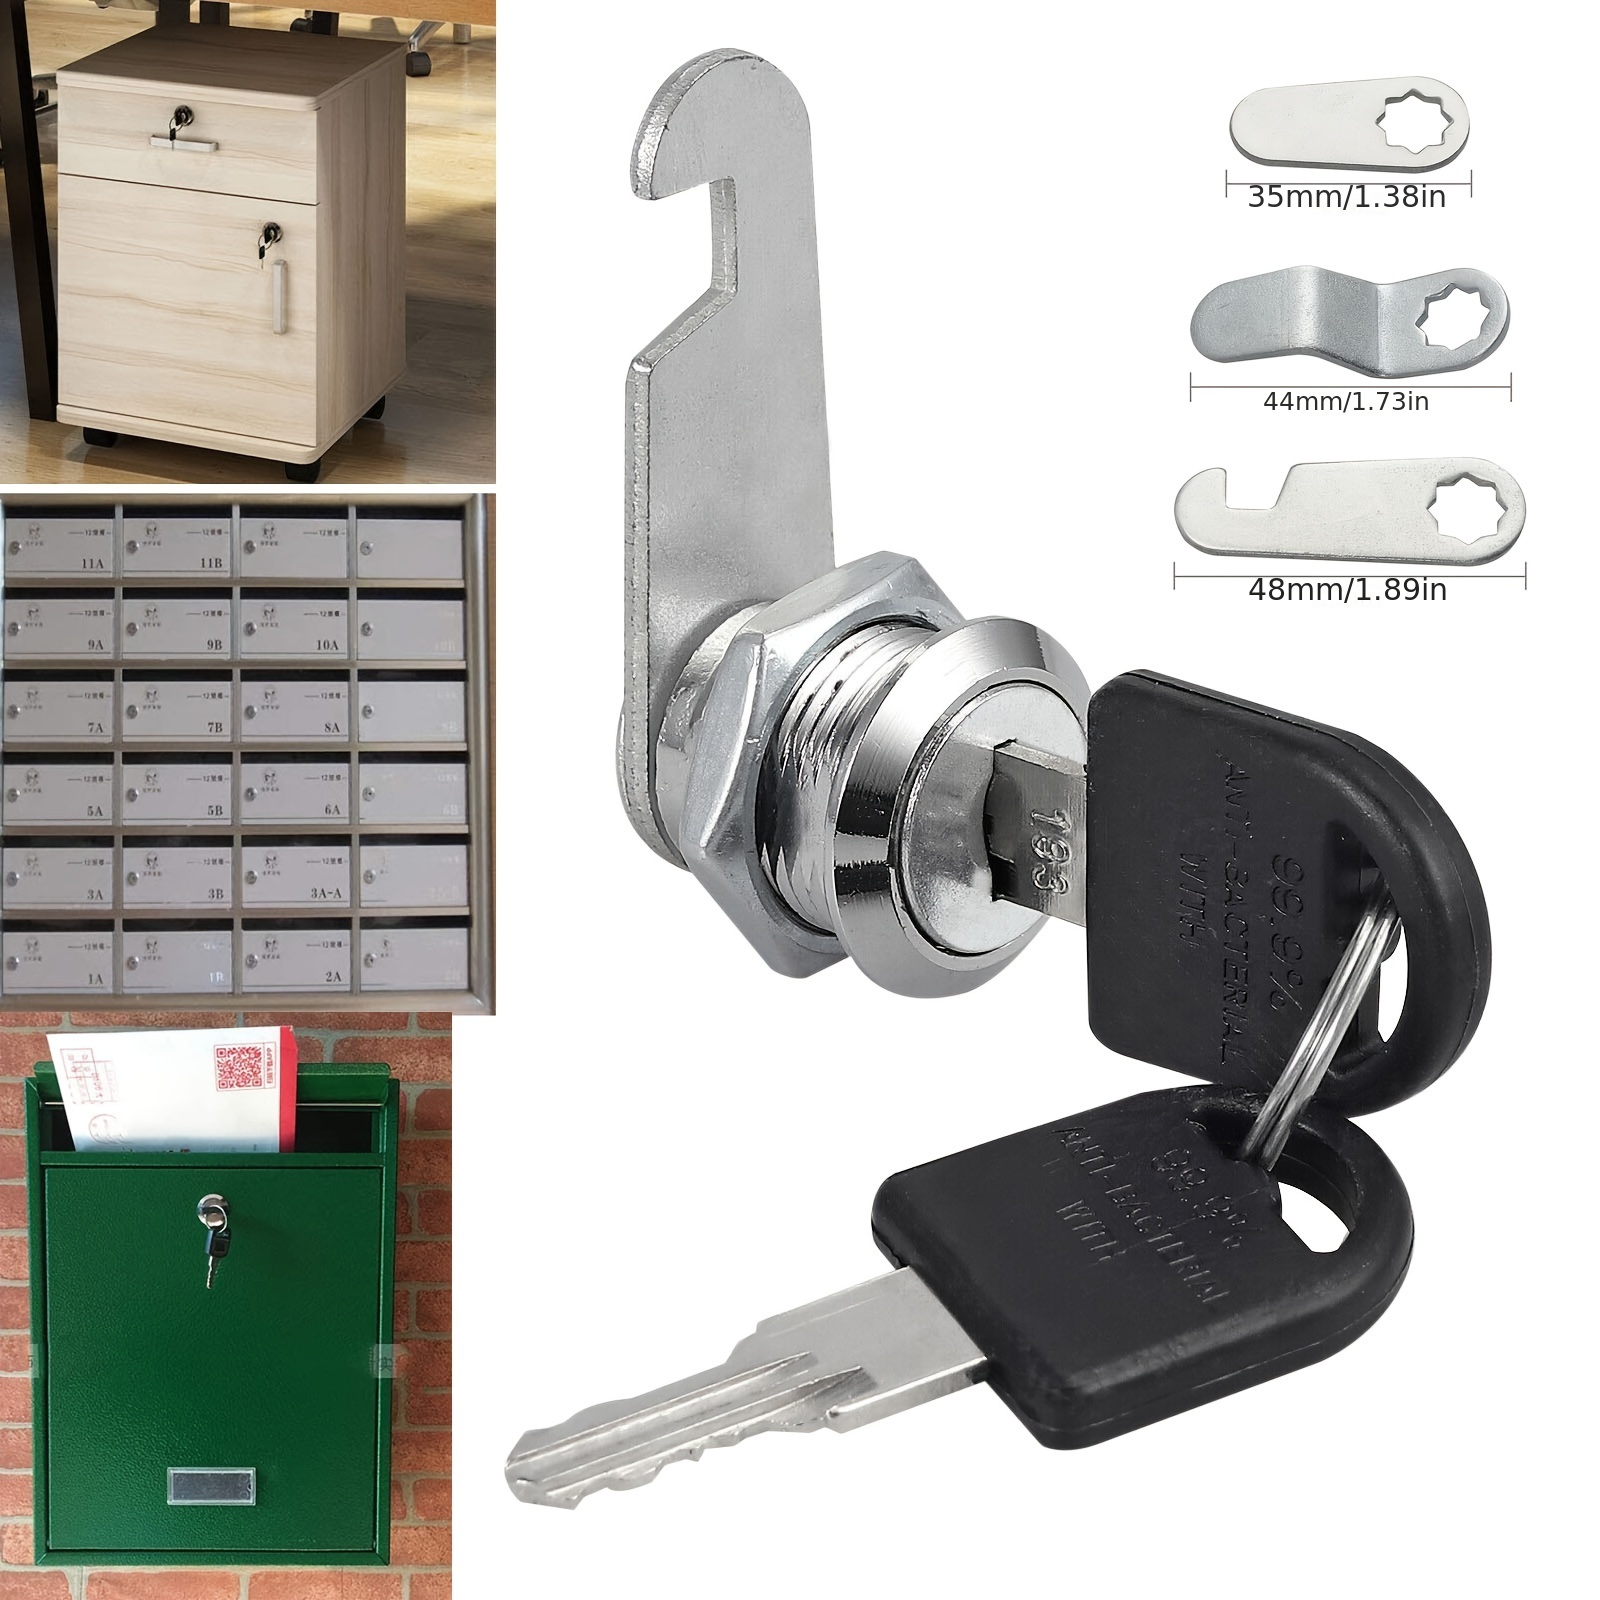 6 Pack Cabinet Cam Locks Keyed Alike, 1-1/8 (30mm) Cam Lock Set for  Cabinets Drawers Mailbox Tool Box RV, File Cabinet Locks with Keys 